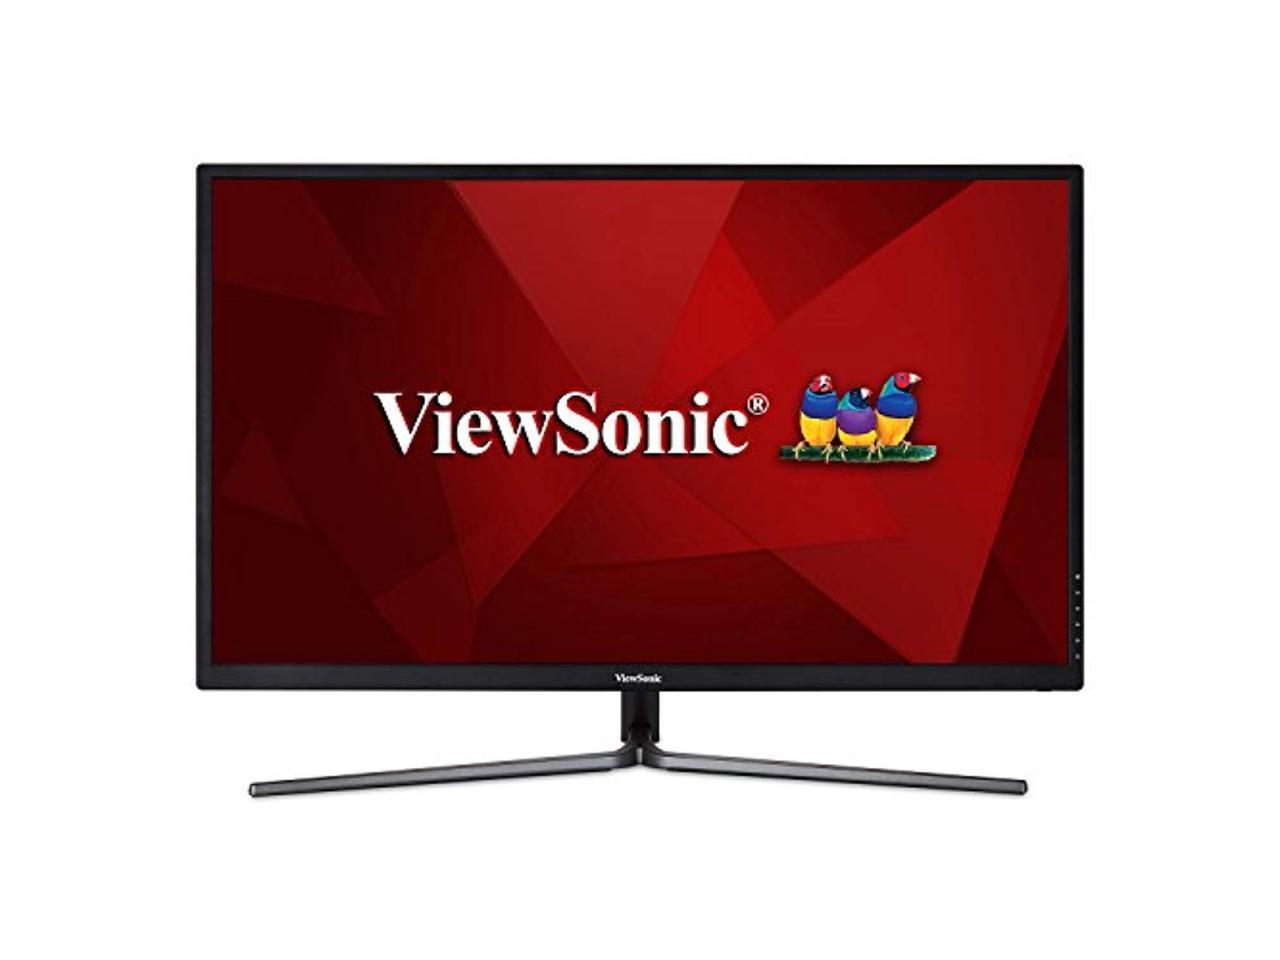 ViewSonic VX3211-2K-MHD 32 Inch IPS WQHD 1440p Monitor with 99% sRGB Color Coverage HDMI VGA and DisplayPort